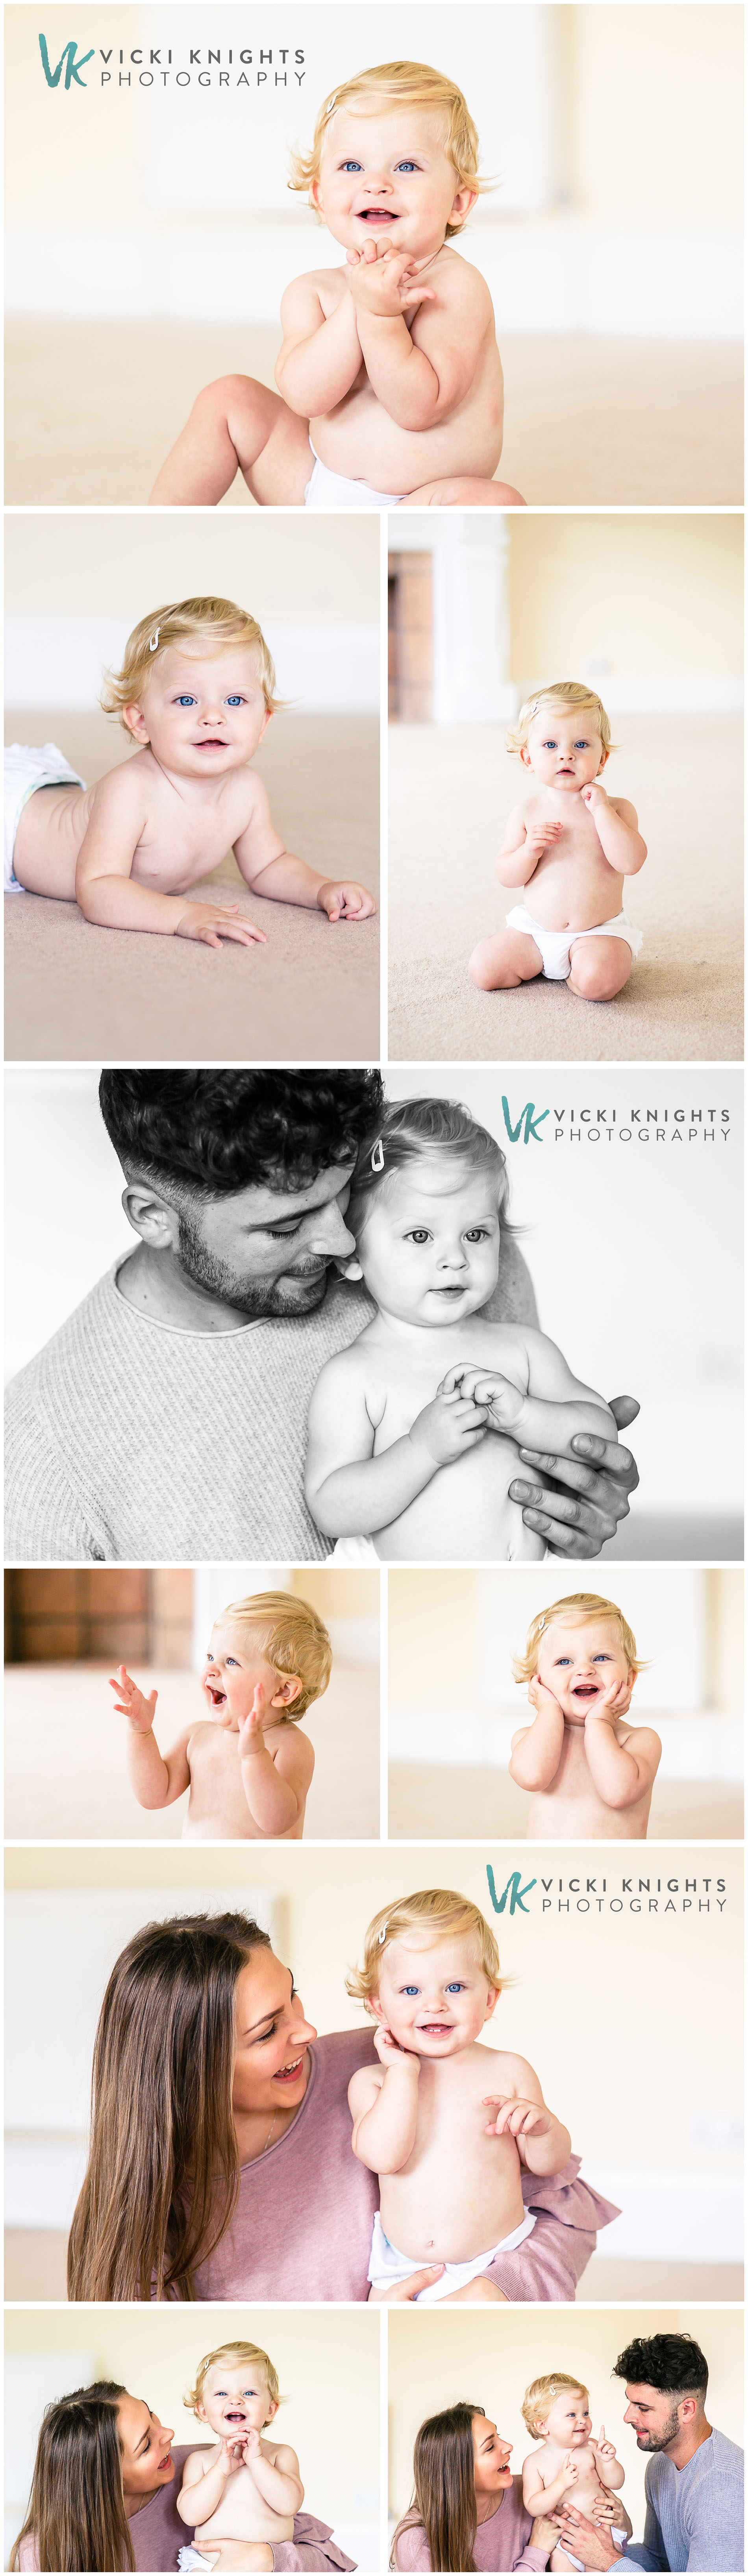 workshop-baby-lifestyle-photography-1